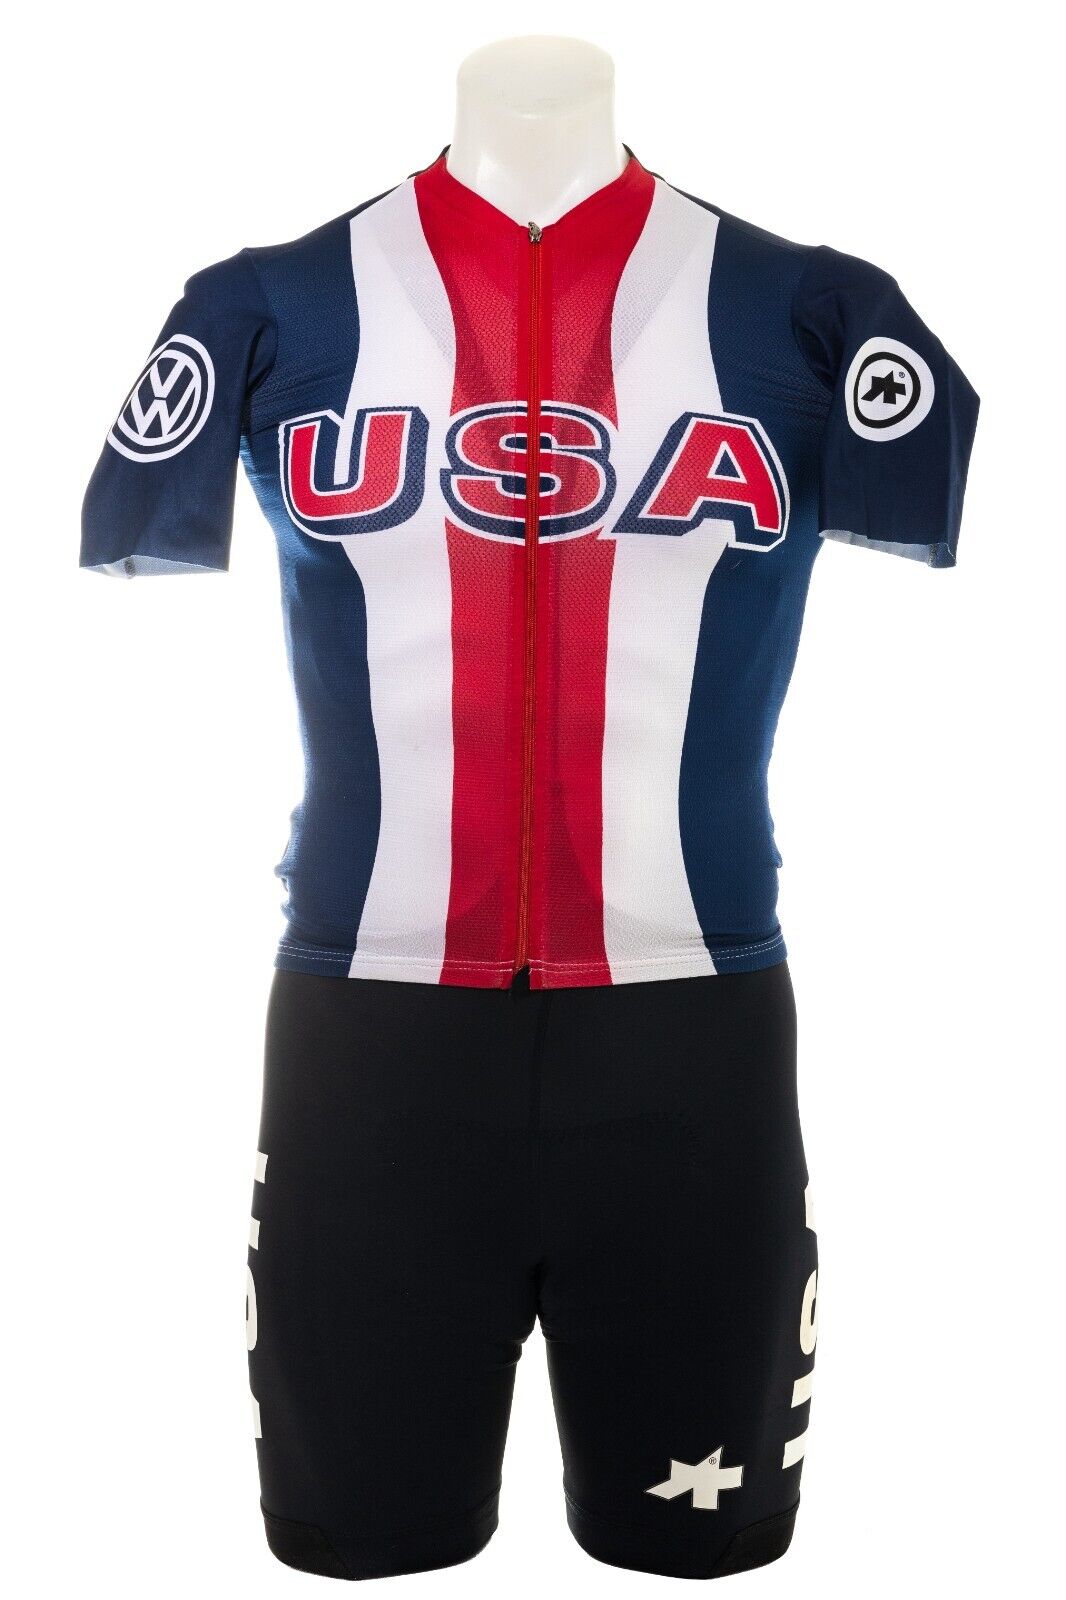 Assos Team USA Short Sleeve Cycling Kit Women SMALL Road Bike Race MTB Olympic